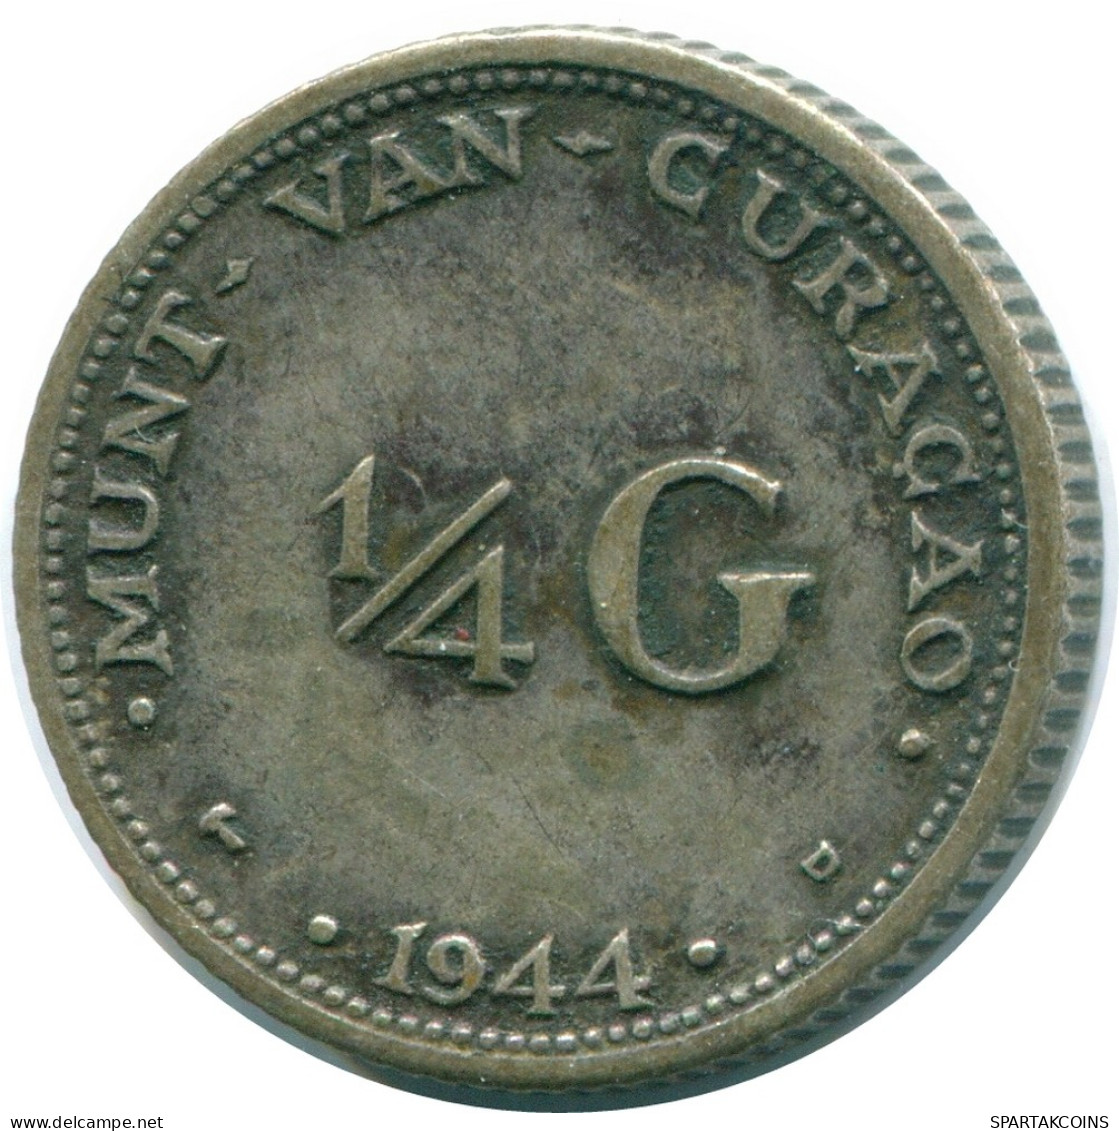 1/4 GULDEN 1944 CURACAO NIEDERLANDE SILBER Koloniale Münze #NL10696.4.D - Curaçao